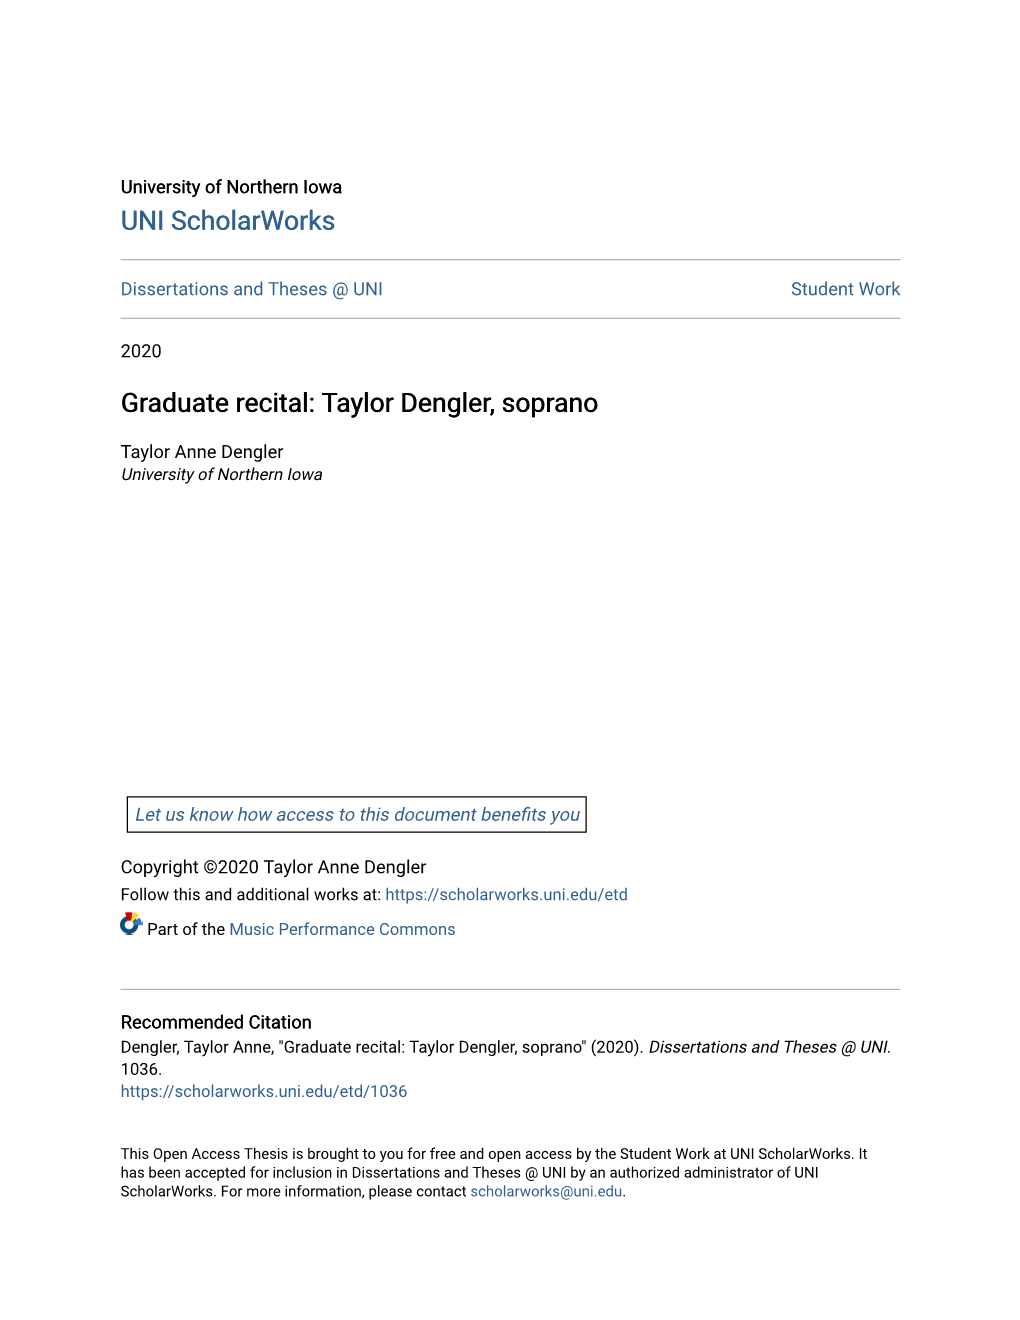 Graduate Recital: Taylor Dengler, Soprano